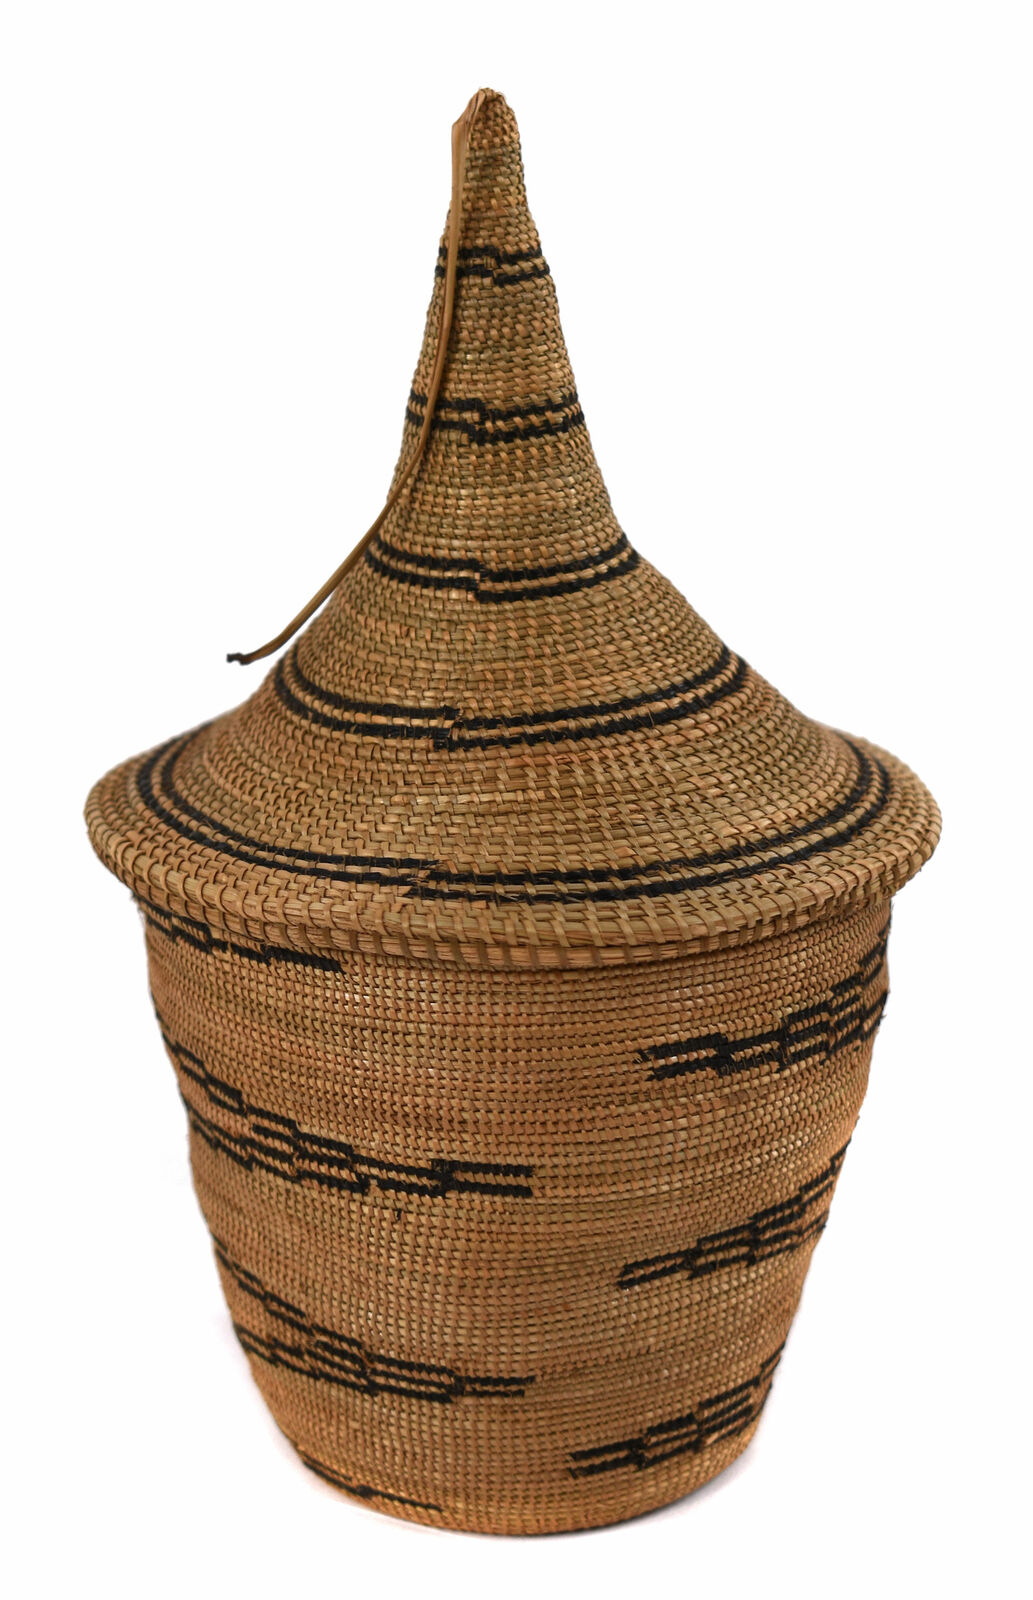 Tutsi Basket Rwanda Old African Art